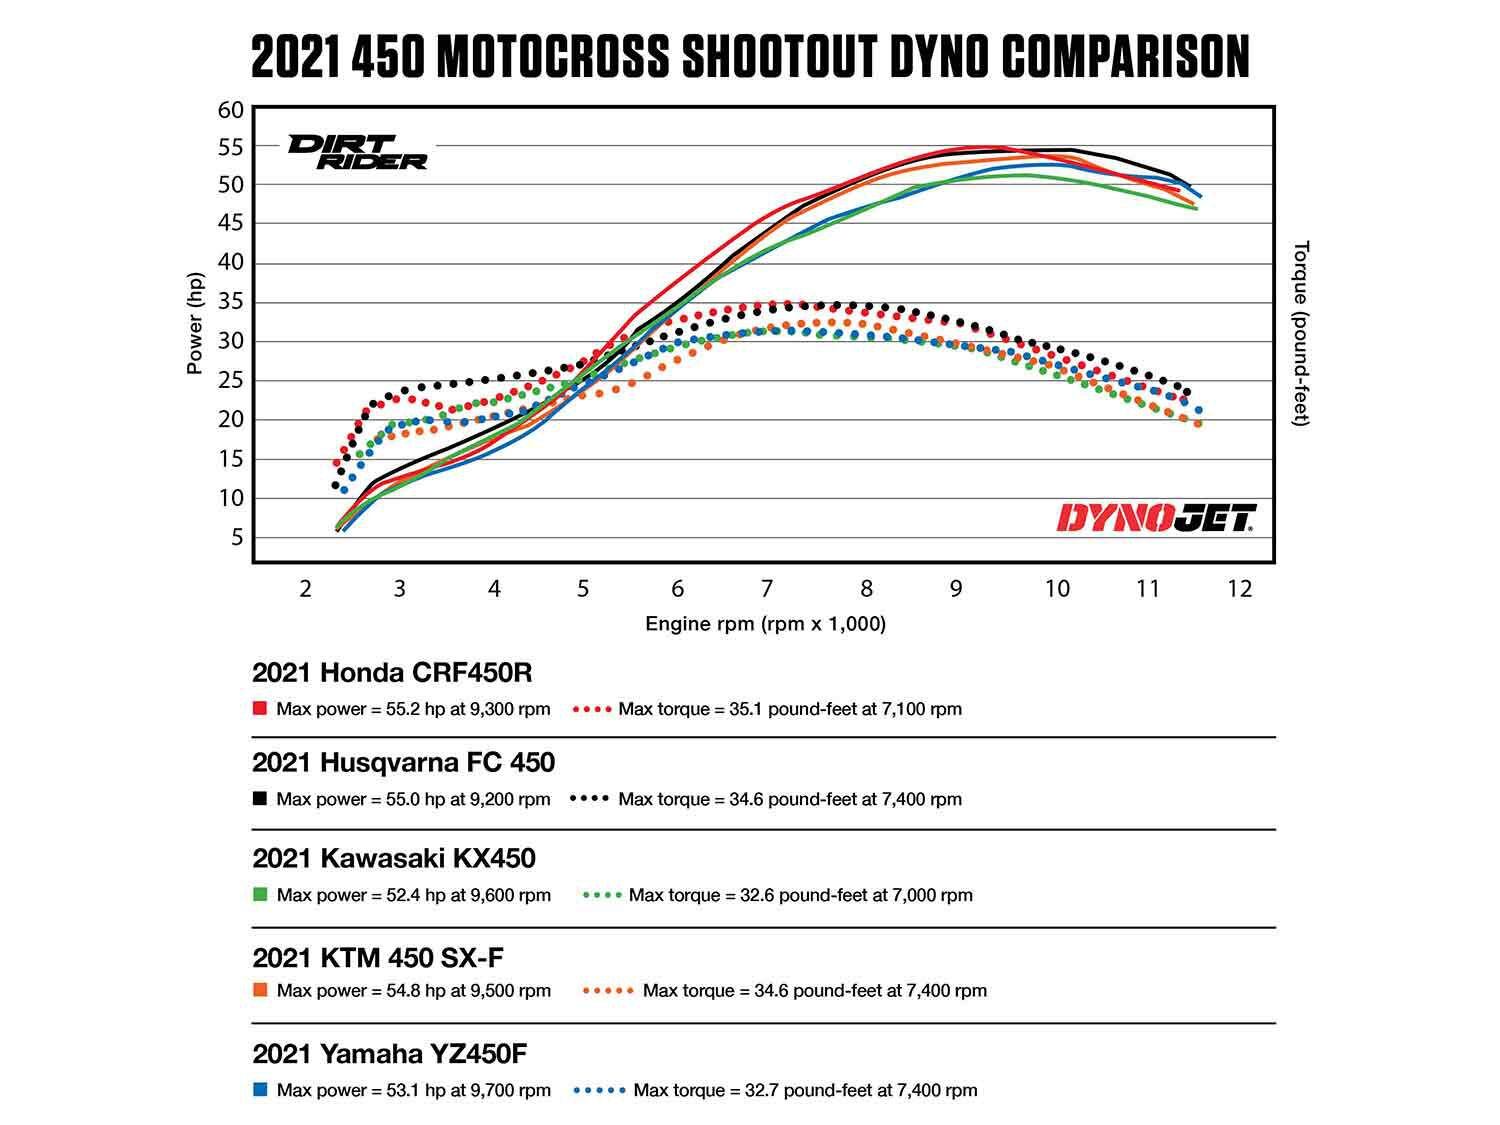 2021 450 Motocross Shootout Dyno Comparison Chart